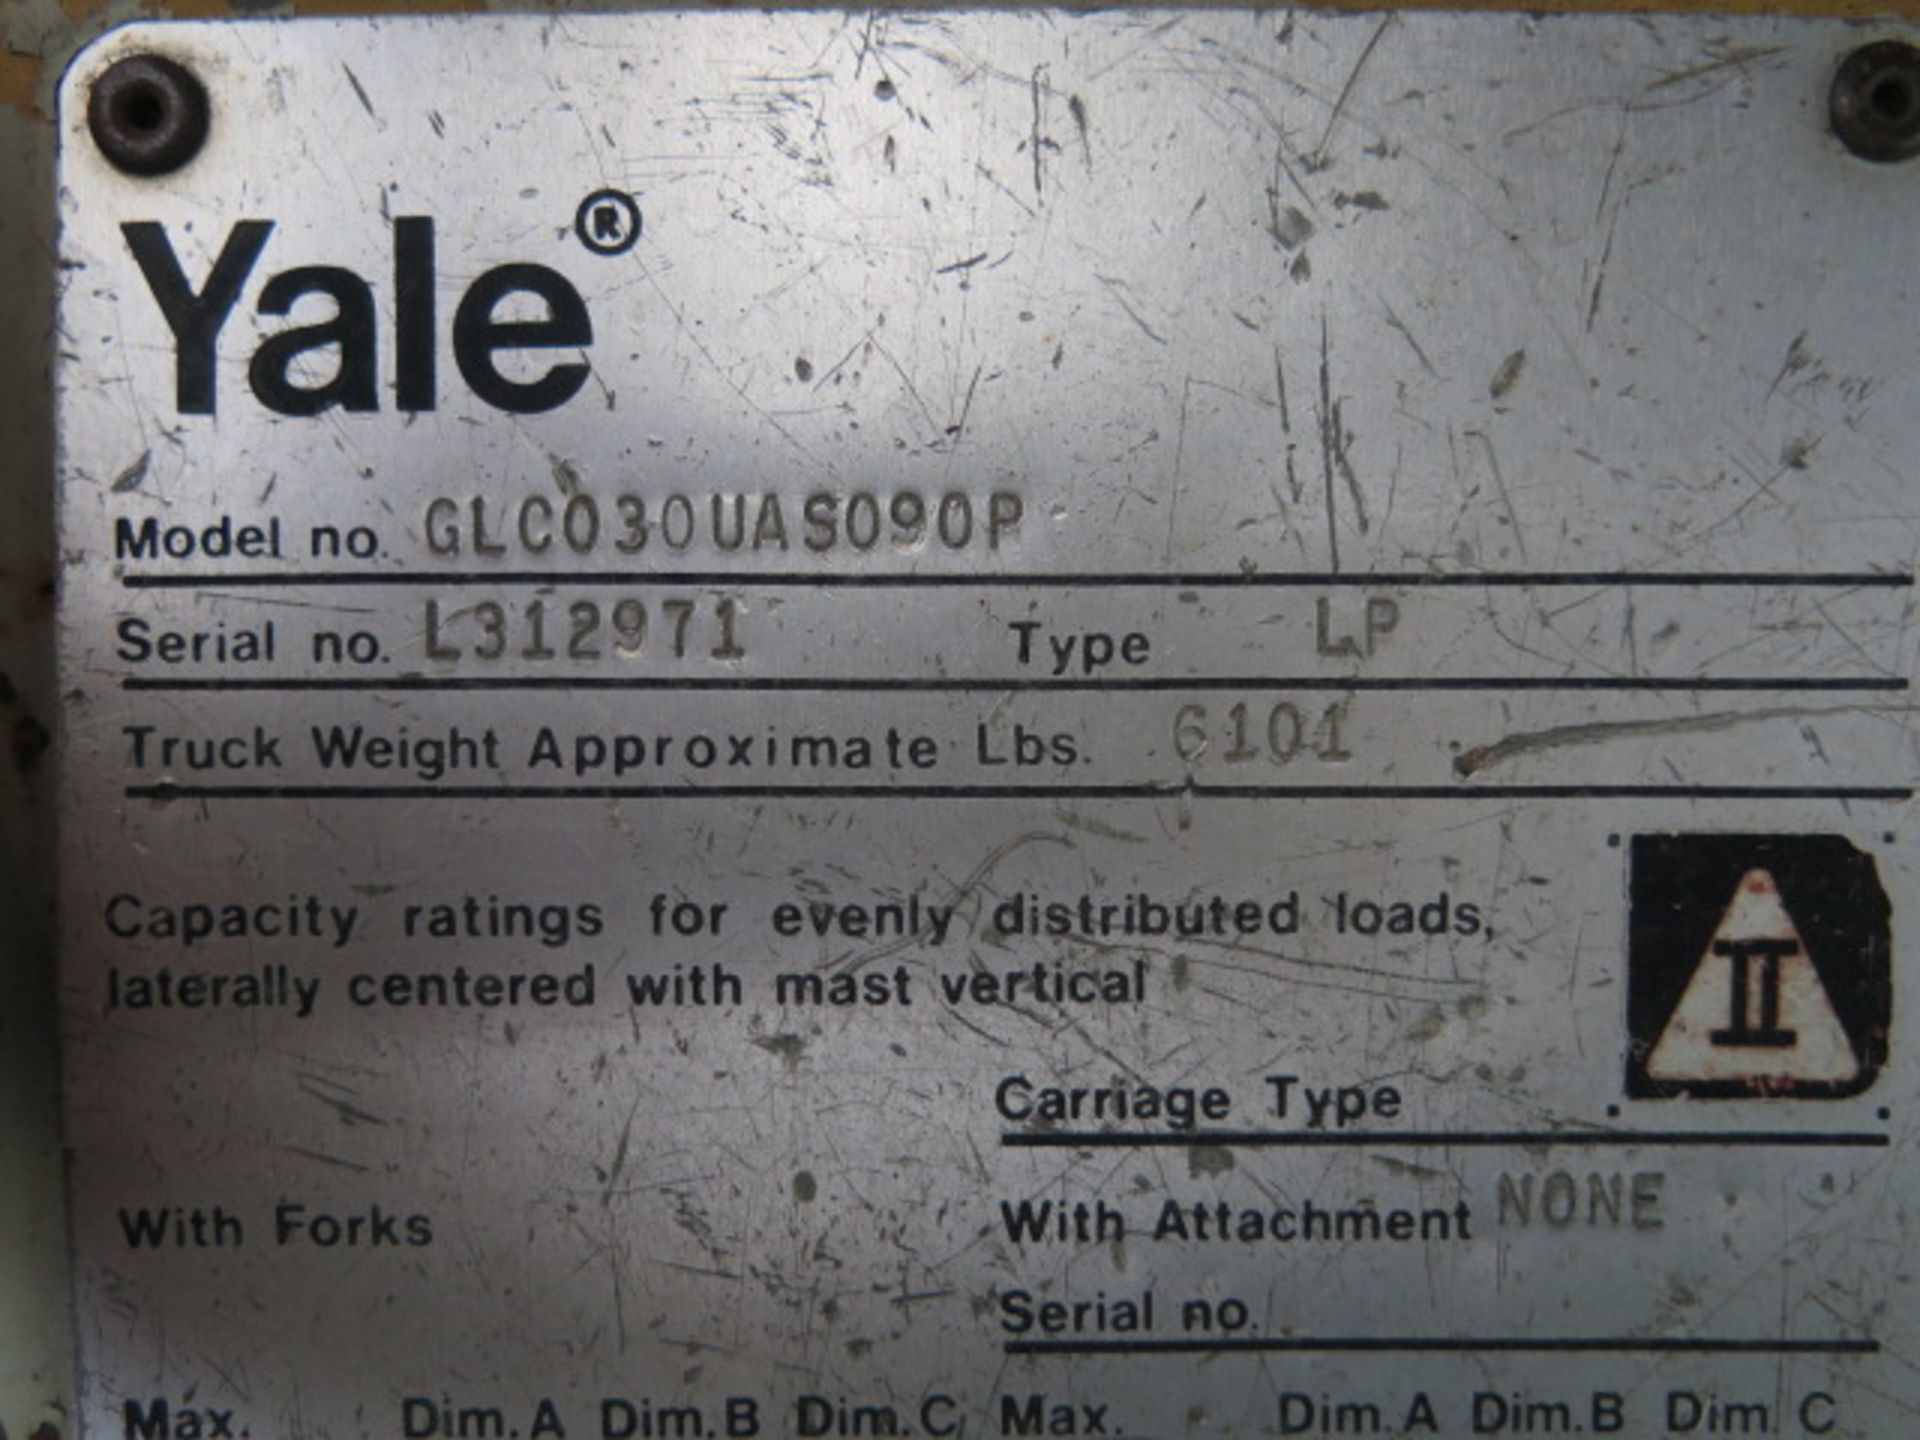 Yale GLC030UAS090P 2900 Lb Cap LPG Forklift s/n L312971 w/ 2-Stage Mast, 144" Lift Height, Cushion - Image 10 of 10